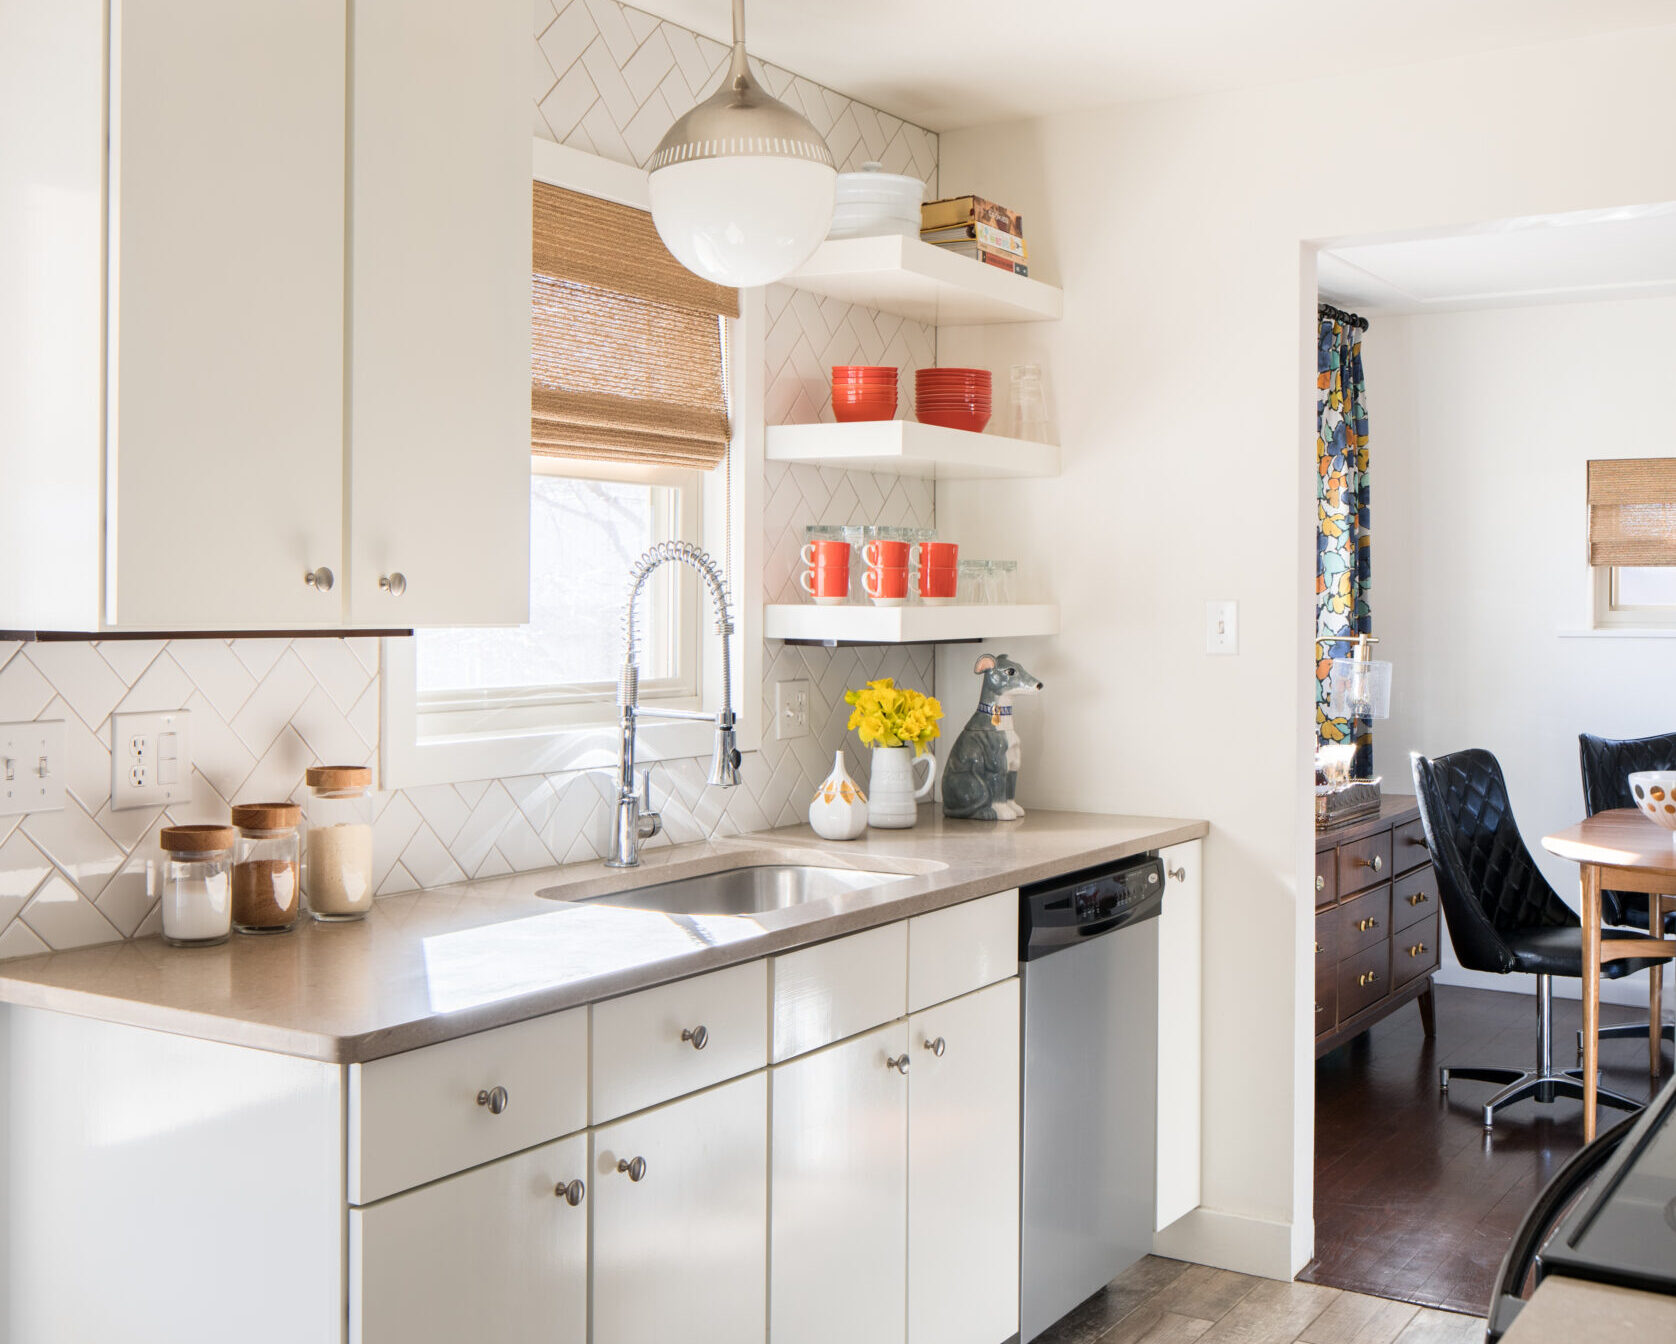 What color should I paint my kitchen? Inside Stories Interior Design Denver Firm